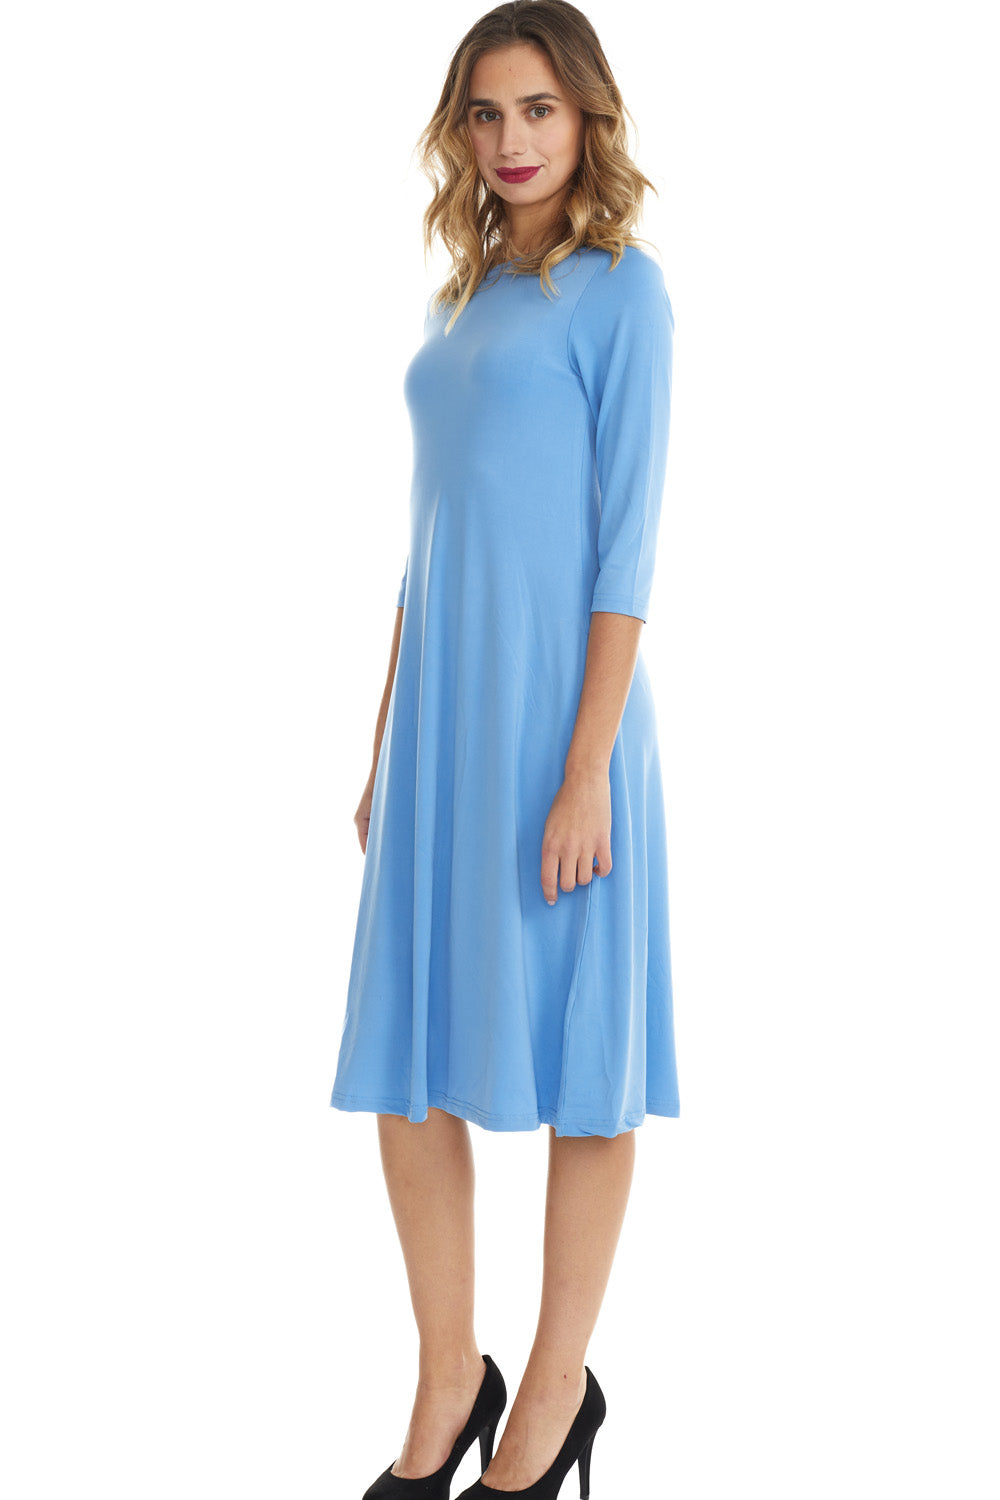 blue flary below knee length 3/4 sleeve crew neck modest tznius a-line dress with pockets